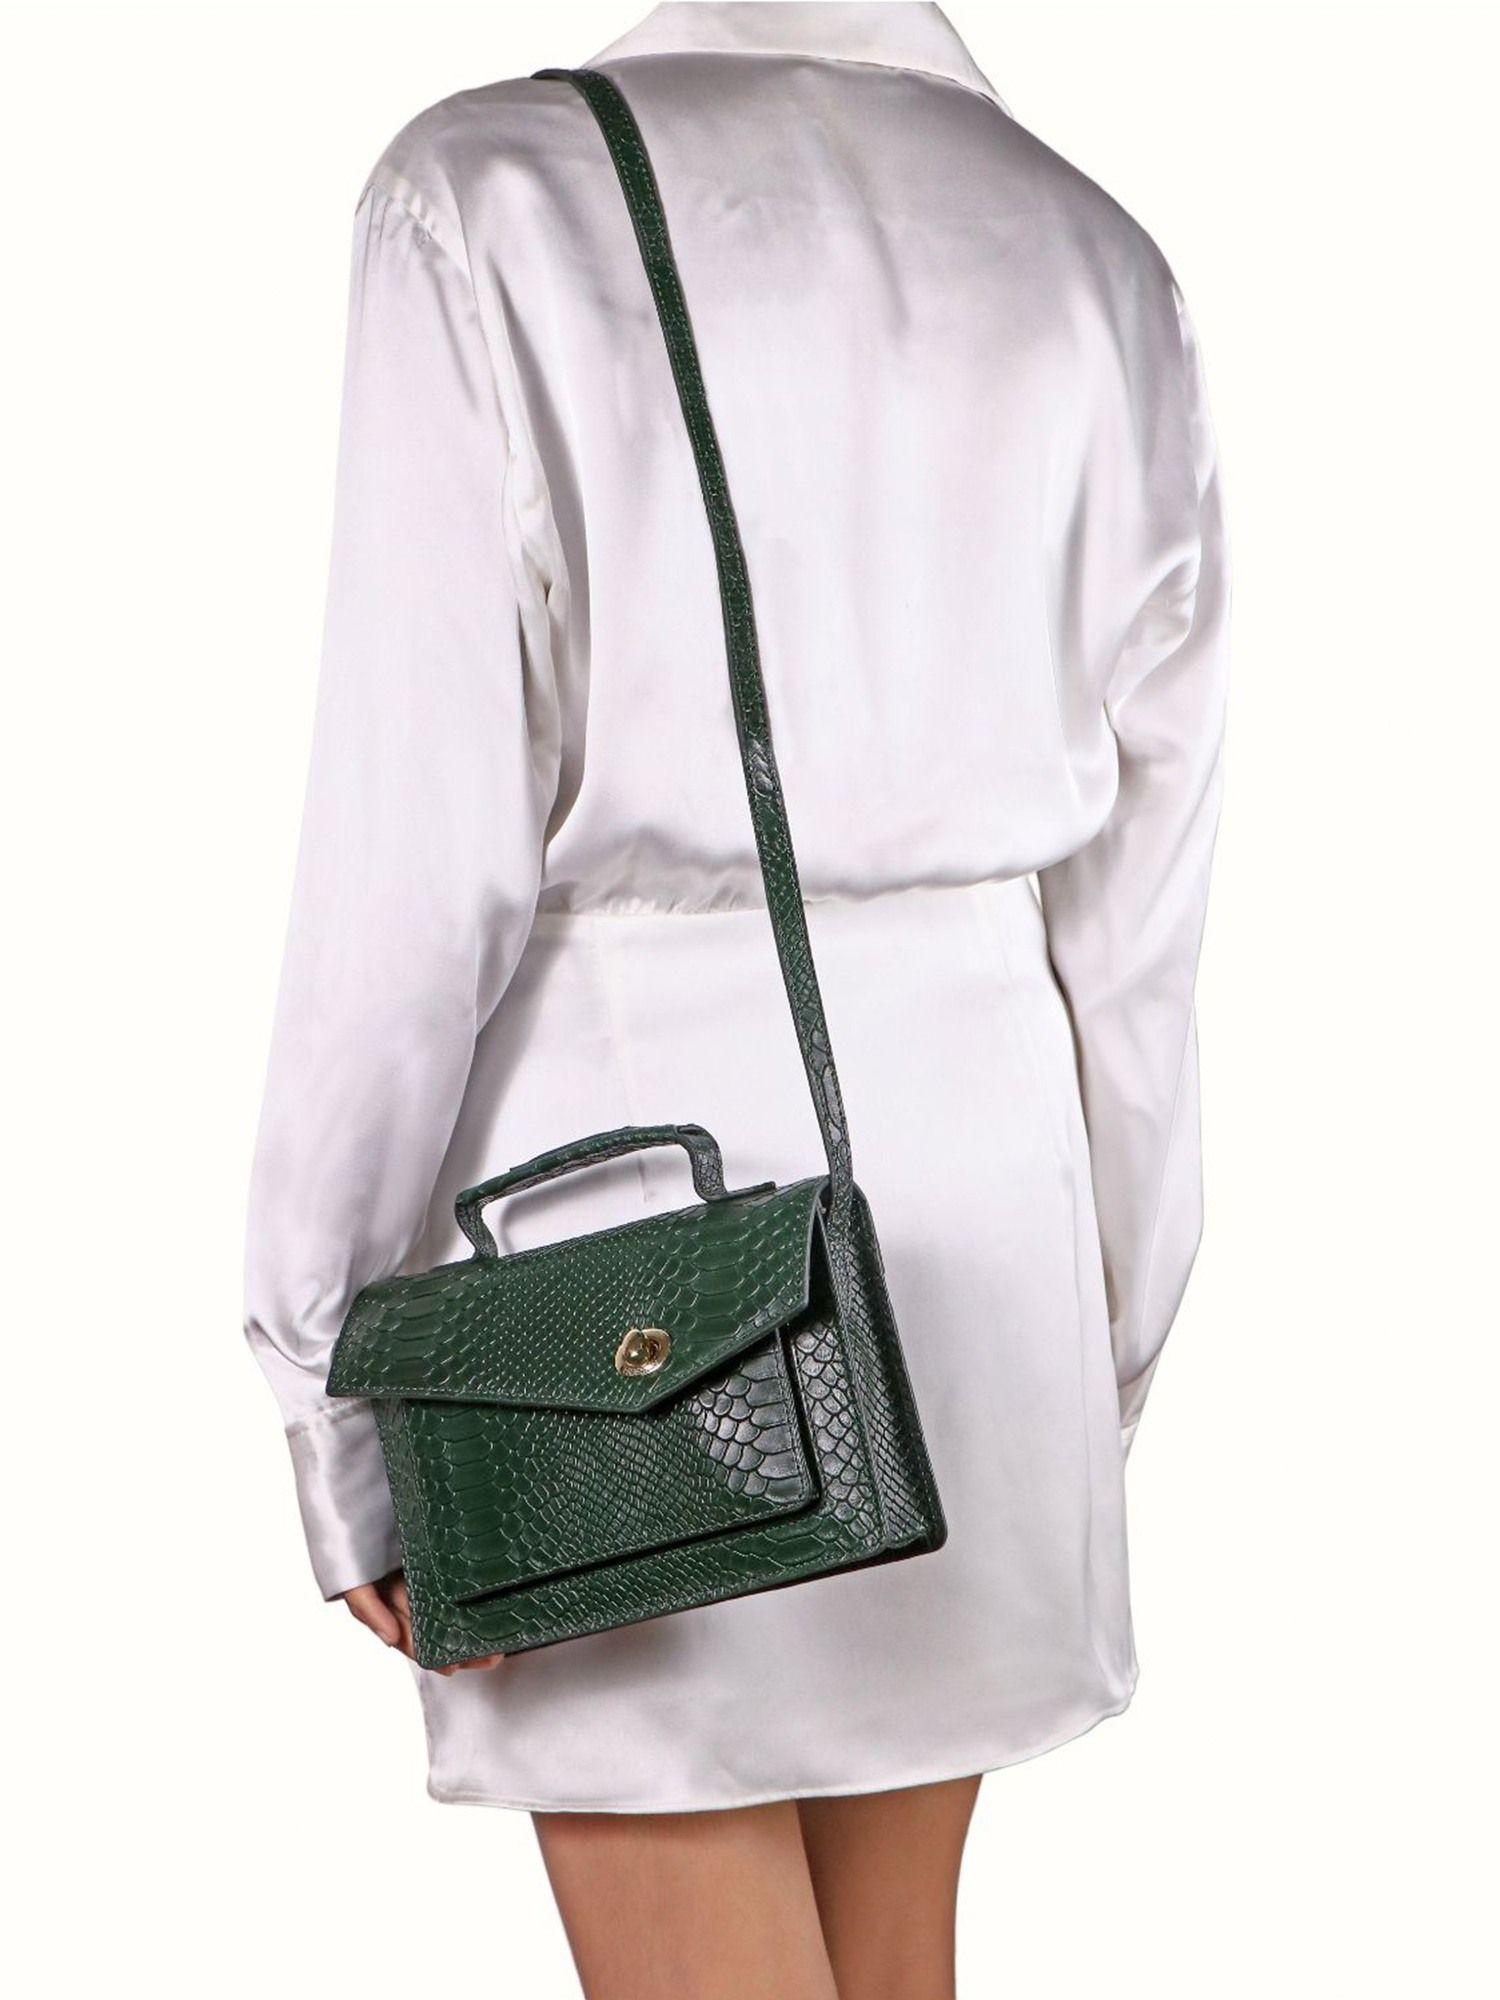 union women's sling bag stylish green bag for effortless elegance (m)